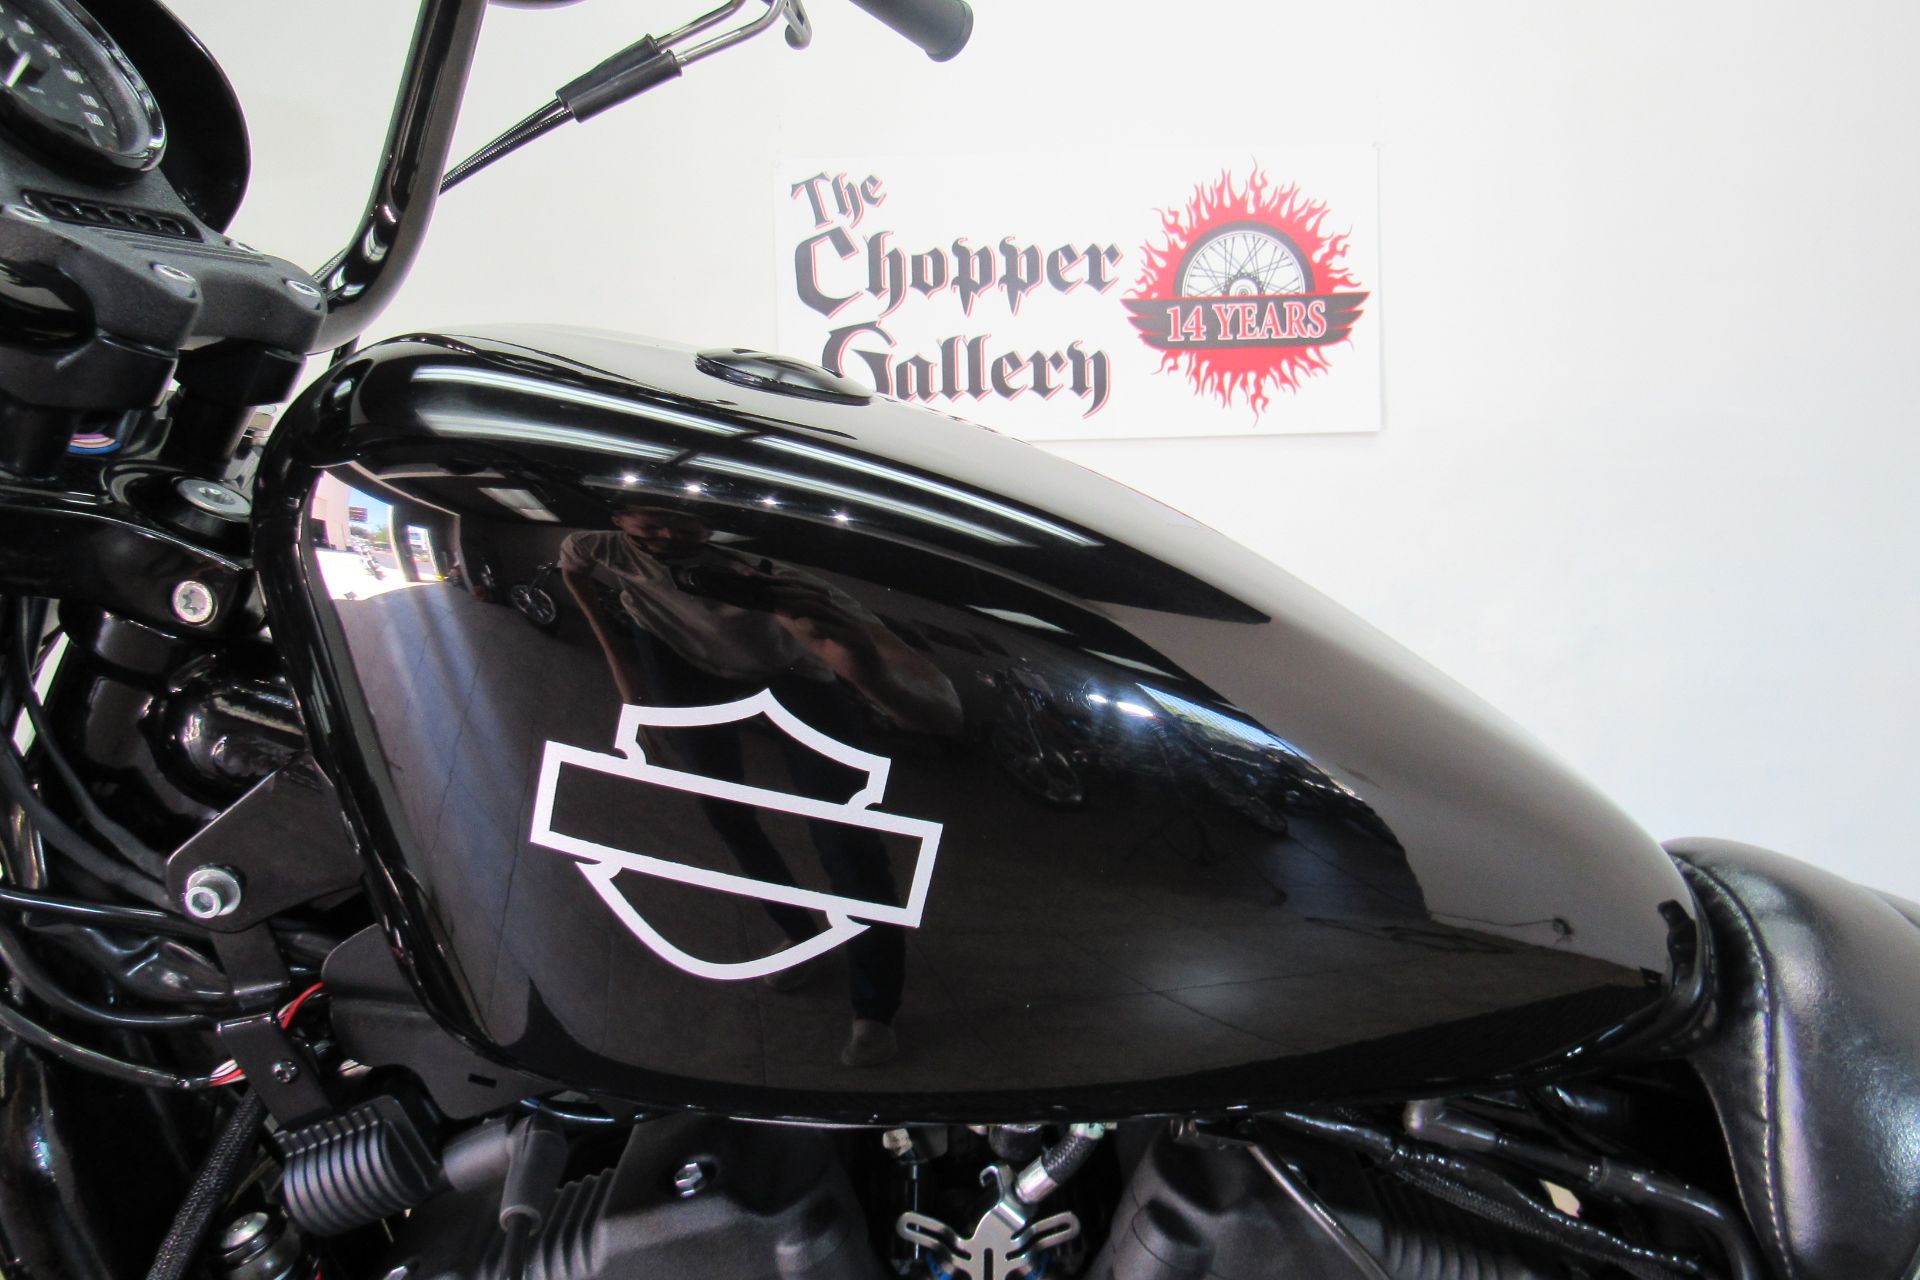 2019 Harley-Davidson Iron 1200™ in Temecula, California - Photo 24